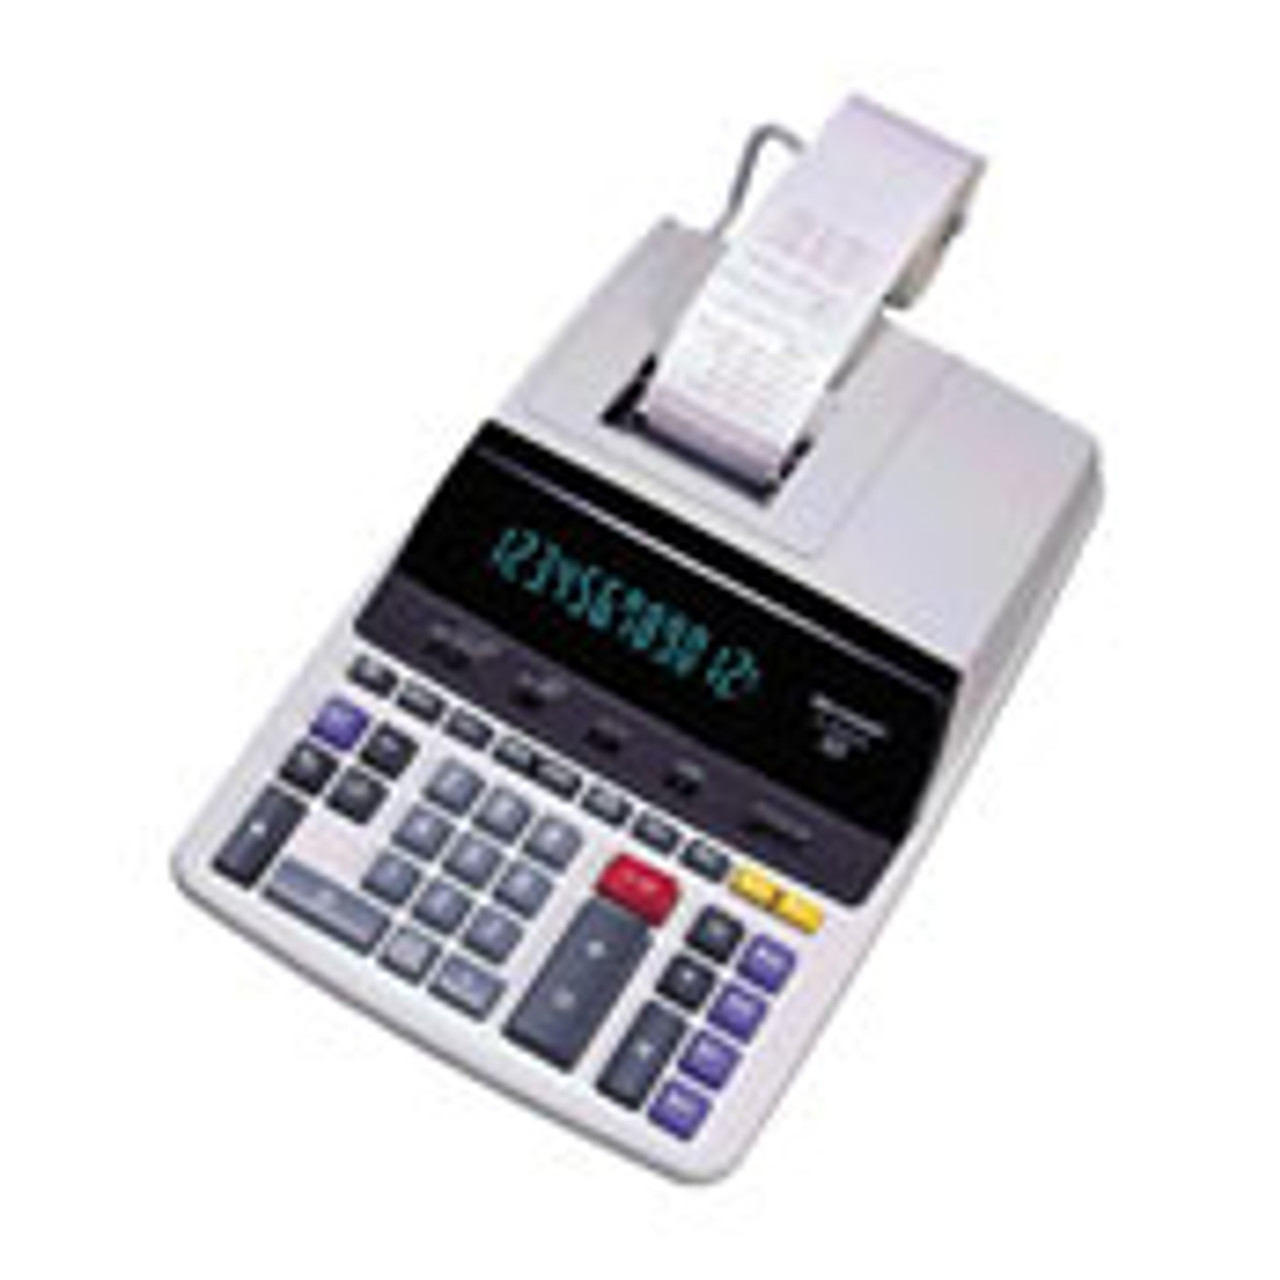 Sharp EL-2630PIII Pocket Financial calculator White calculator